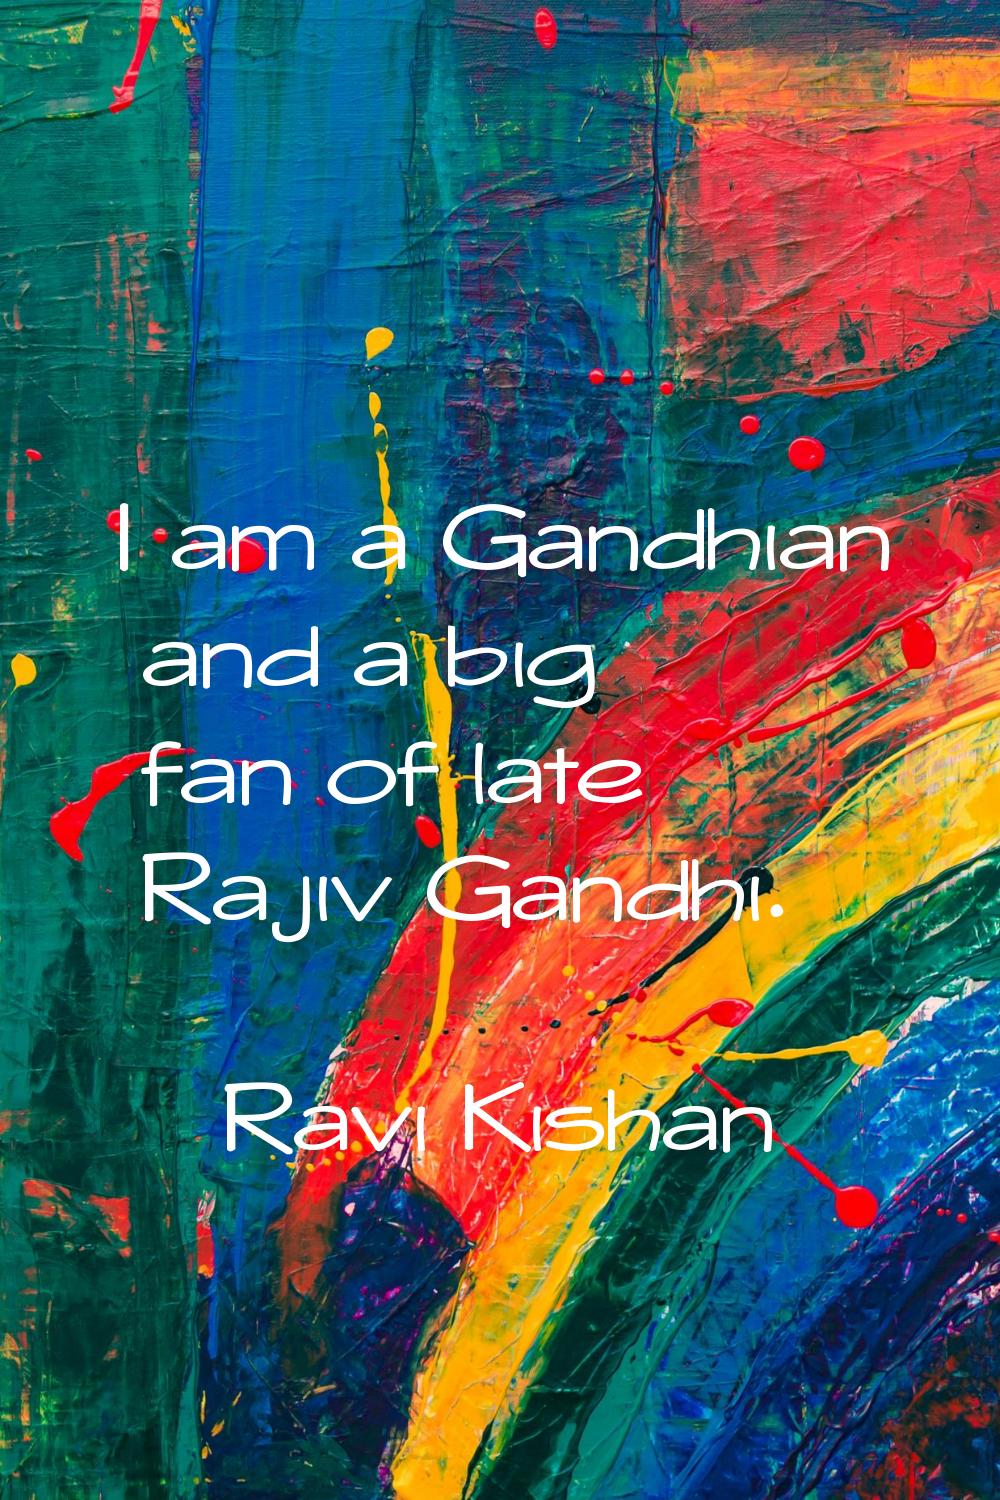 I am a Gandhian and a big fan of late Rajiv Gandhi.